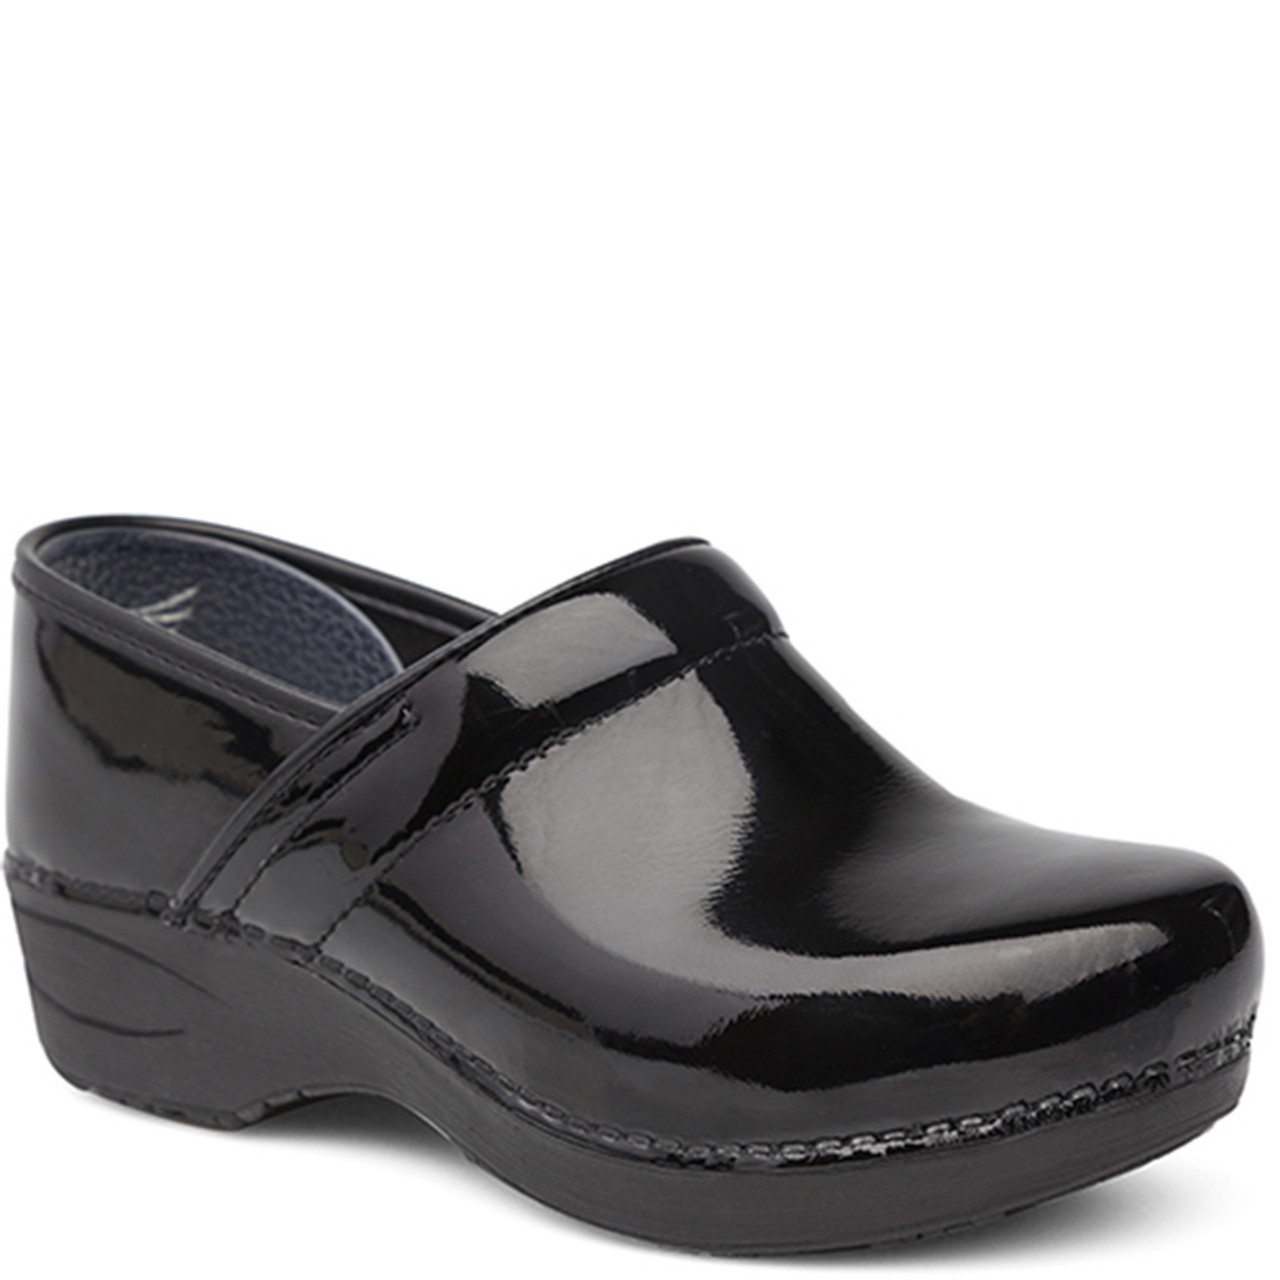 Dansko XP 2.0 BLACK PATENT LEATHER Clogs - Family Footwear Center